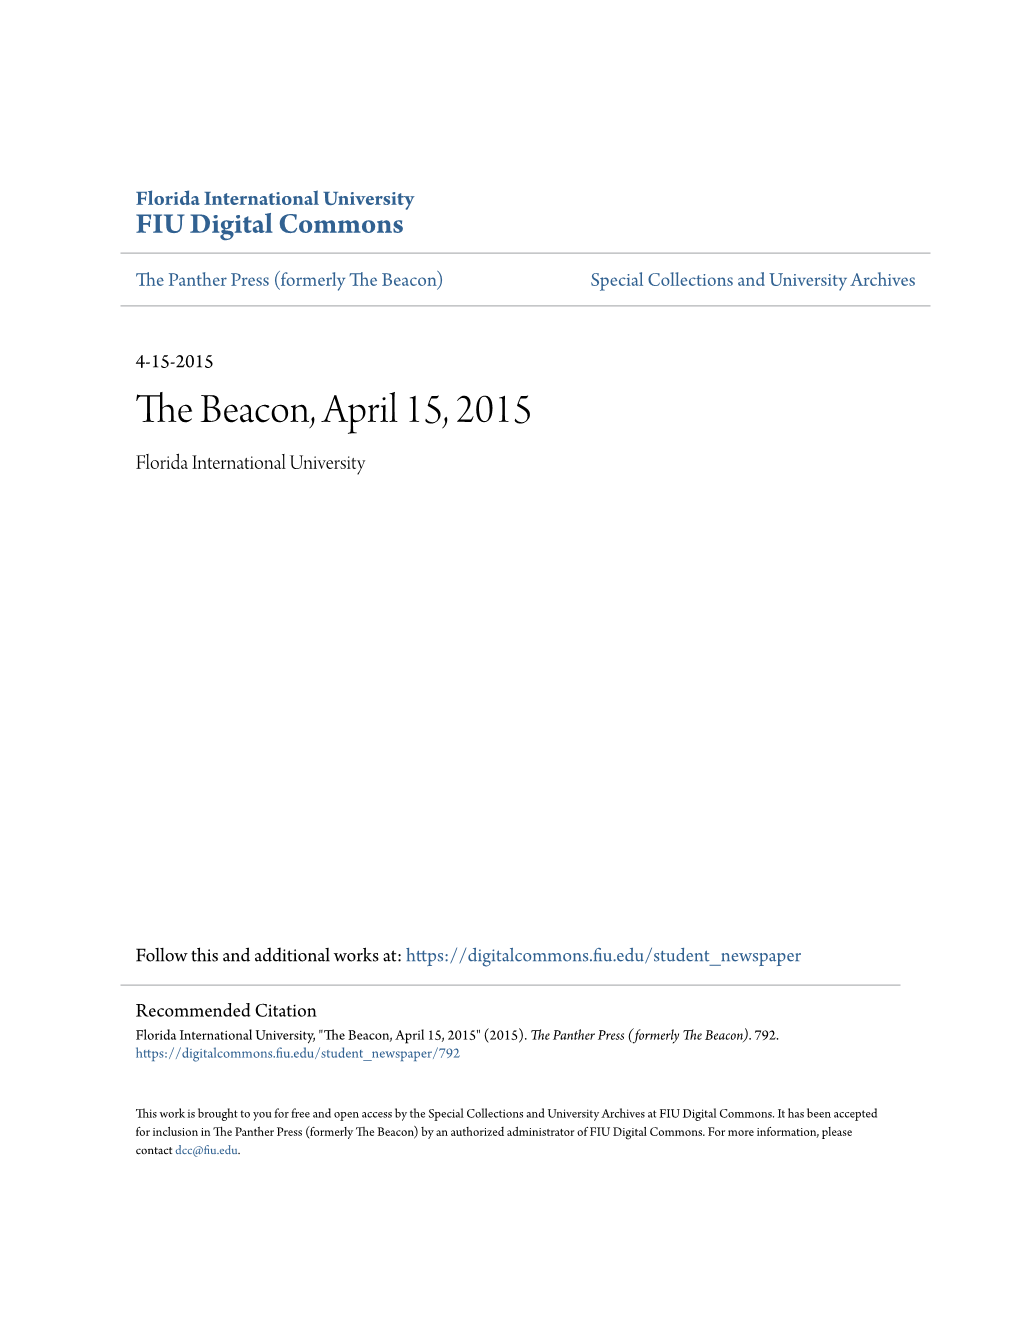 The Beacon, April 15, 2015 Florida International University